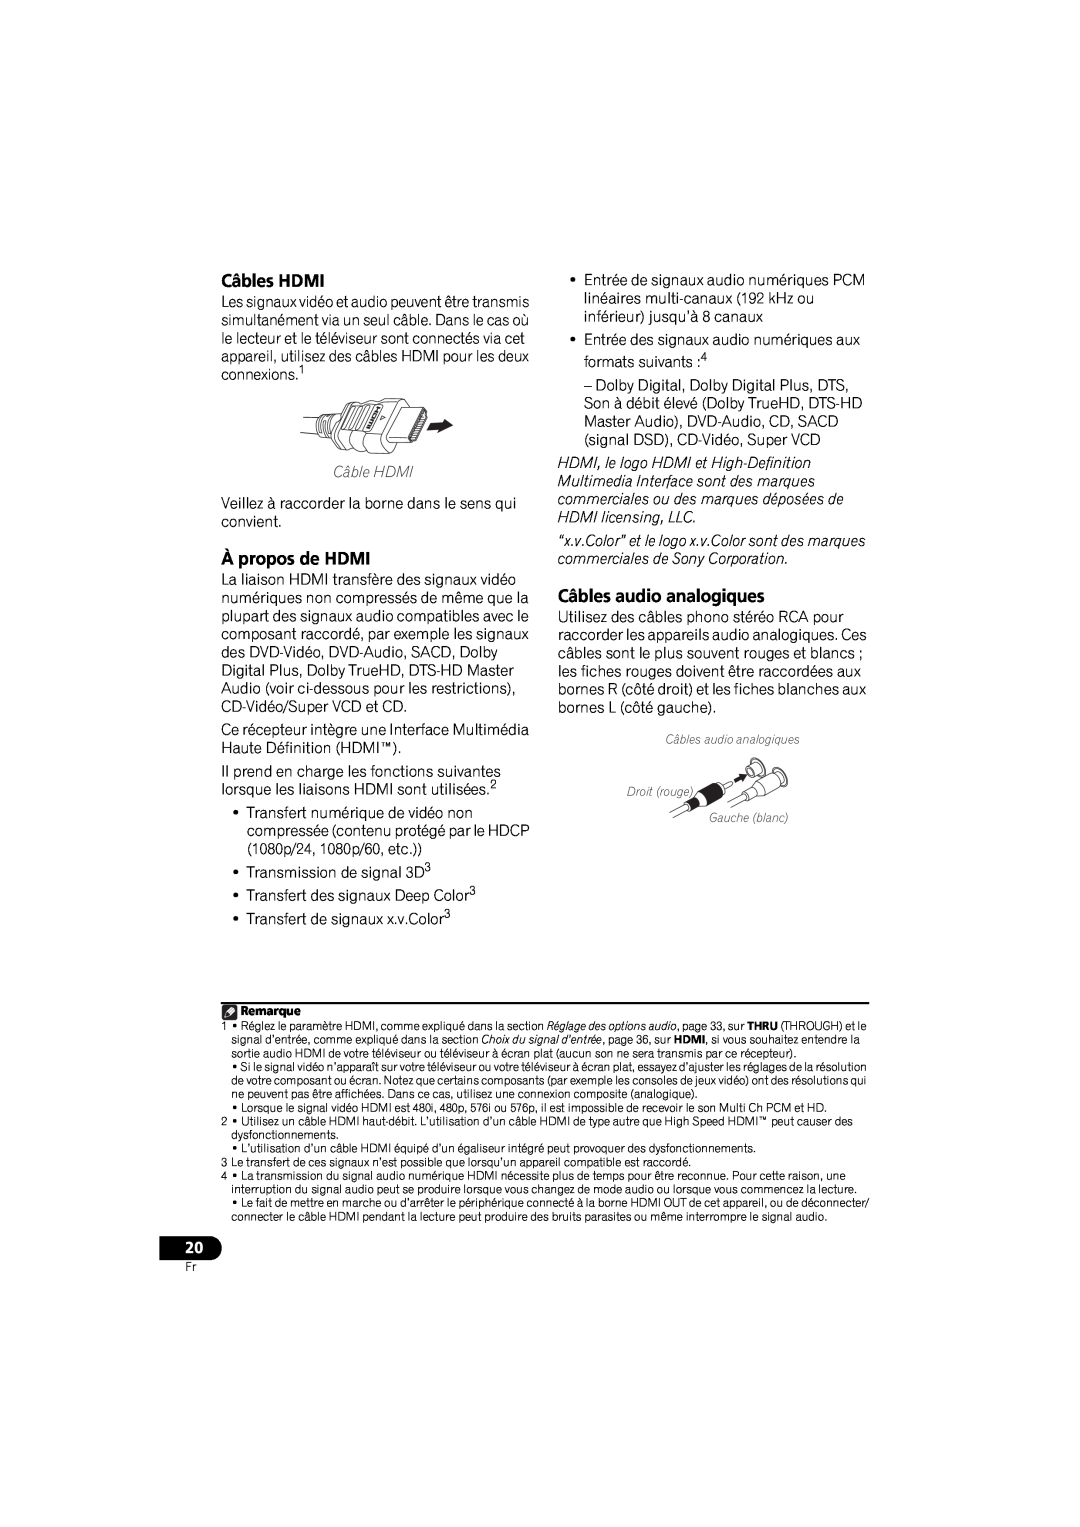 Pioneer VSX-520 manual Câbles HDMI, À propos de HDMI, Câbles audio analogiques, Câble HDMI 